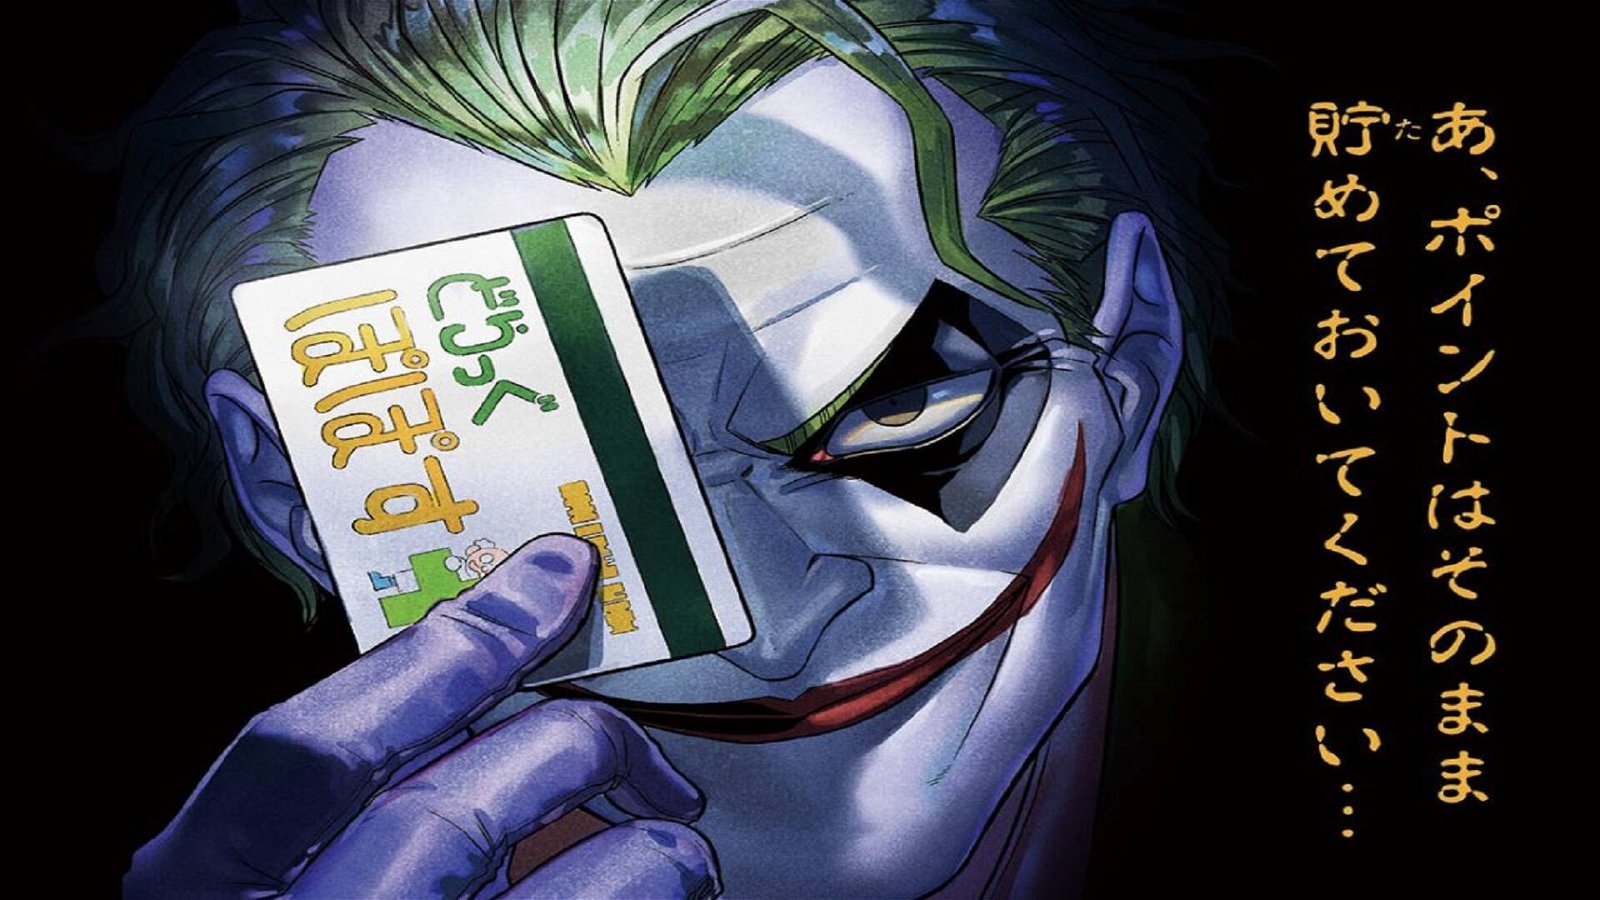 Immagine di One Operation Joker - il manga di Joker